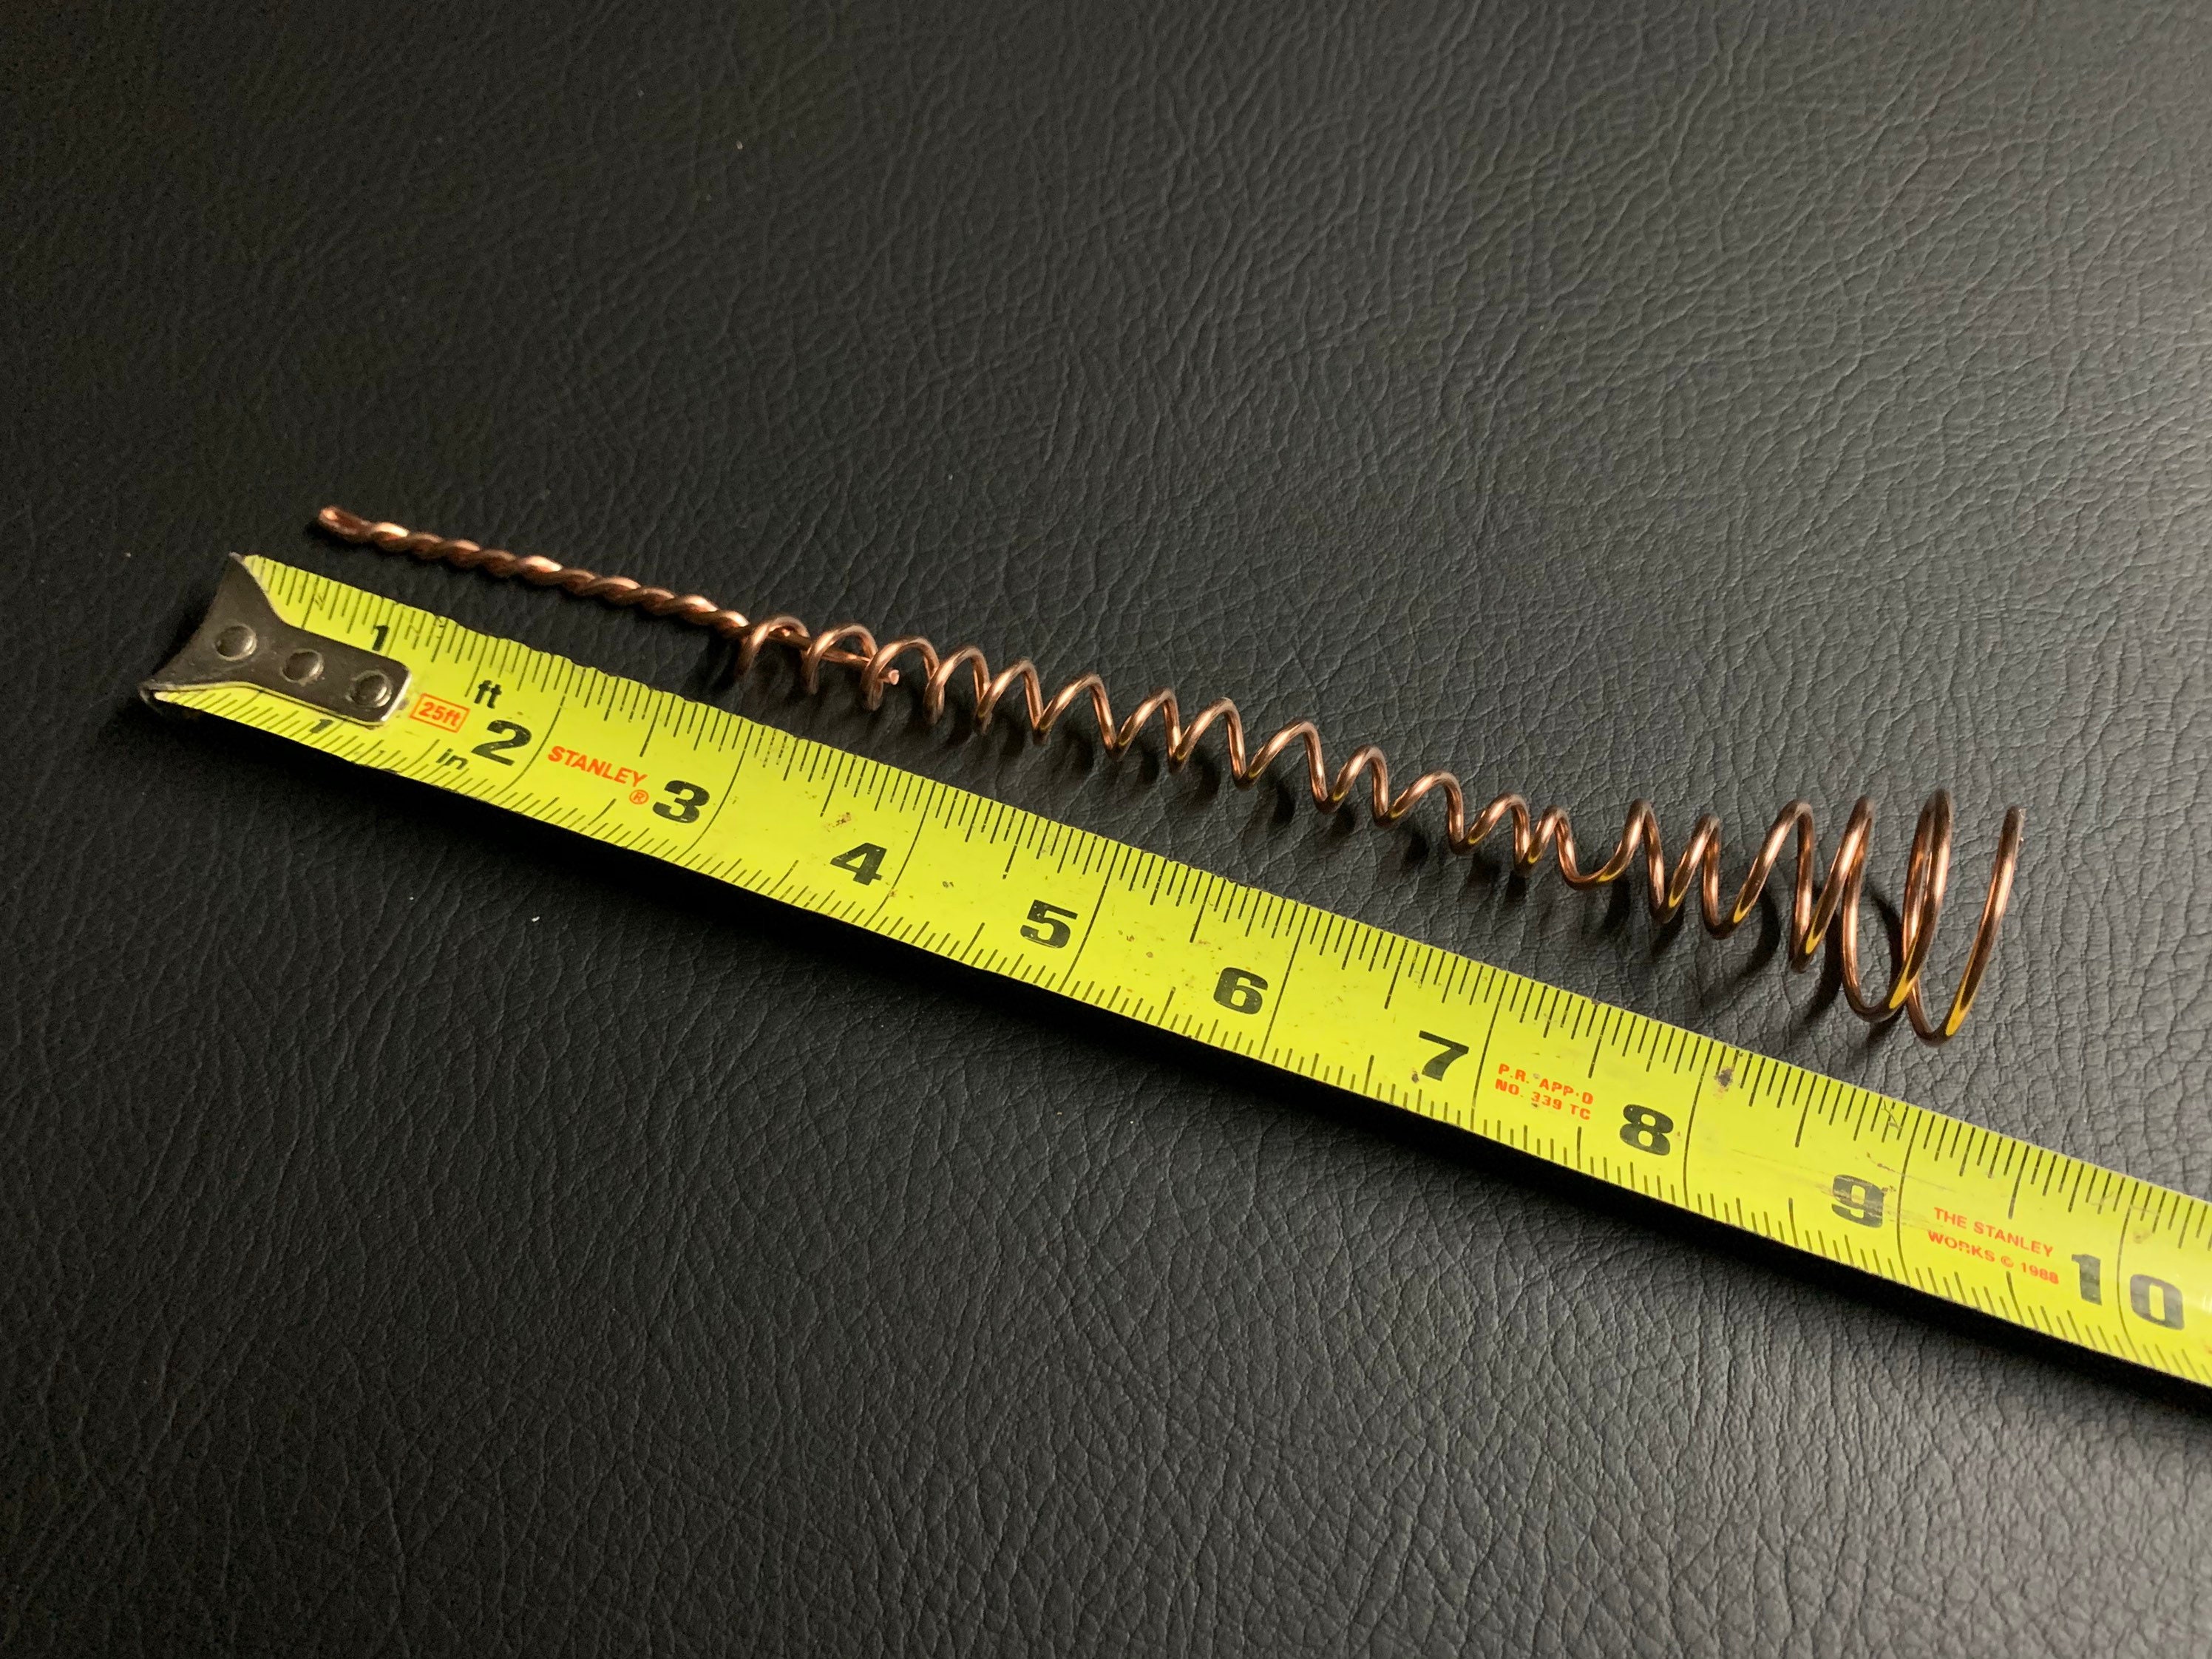 99.9% Dead Soft Copper Wire, Electroculture Copper Gardening Antenna, 16  Gauge/ 1.3 Mm Diameter,127 Feet / 39M, 1 Pound Spool - AliExpress